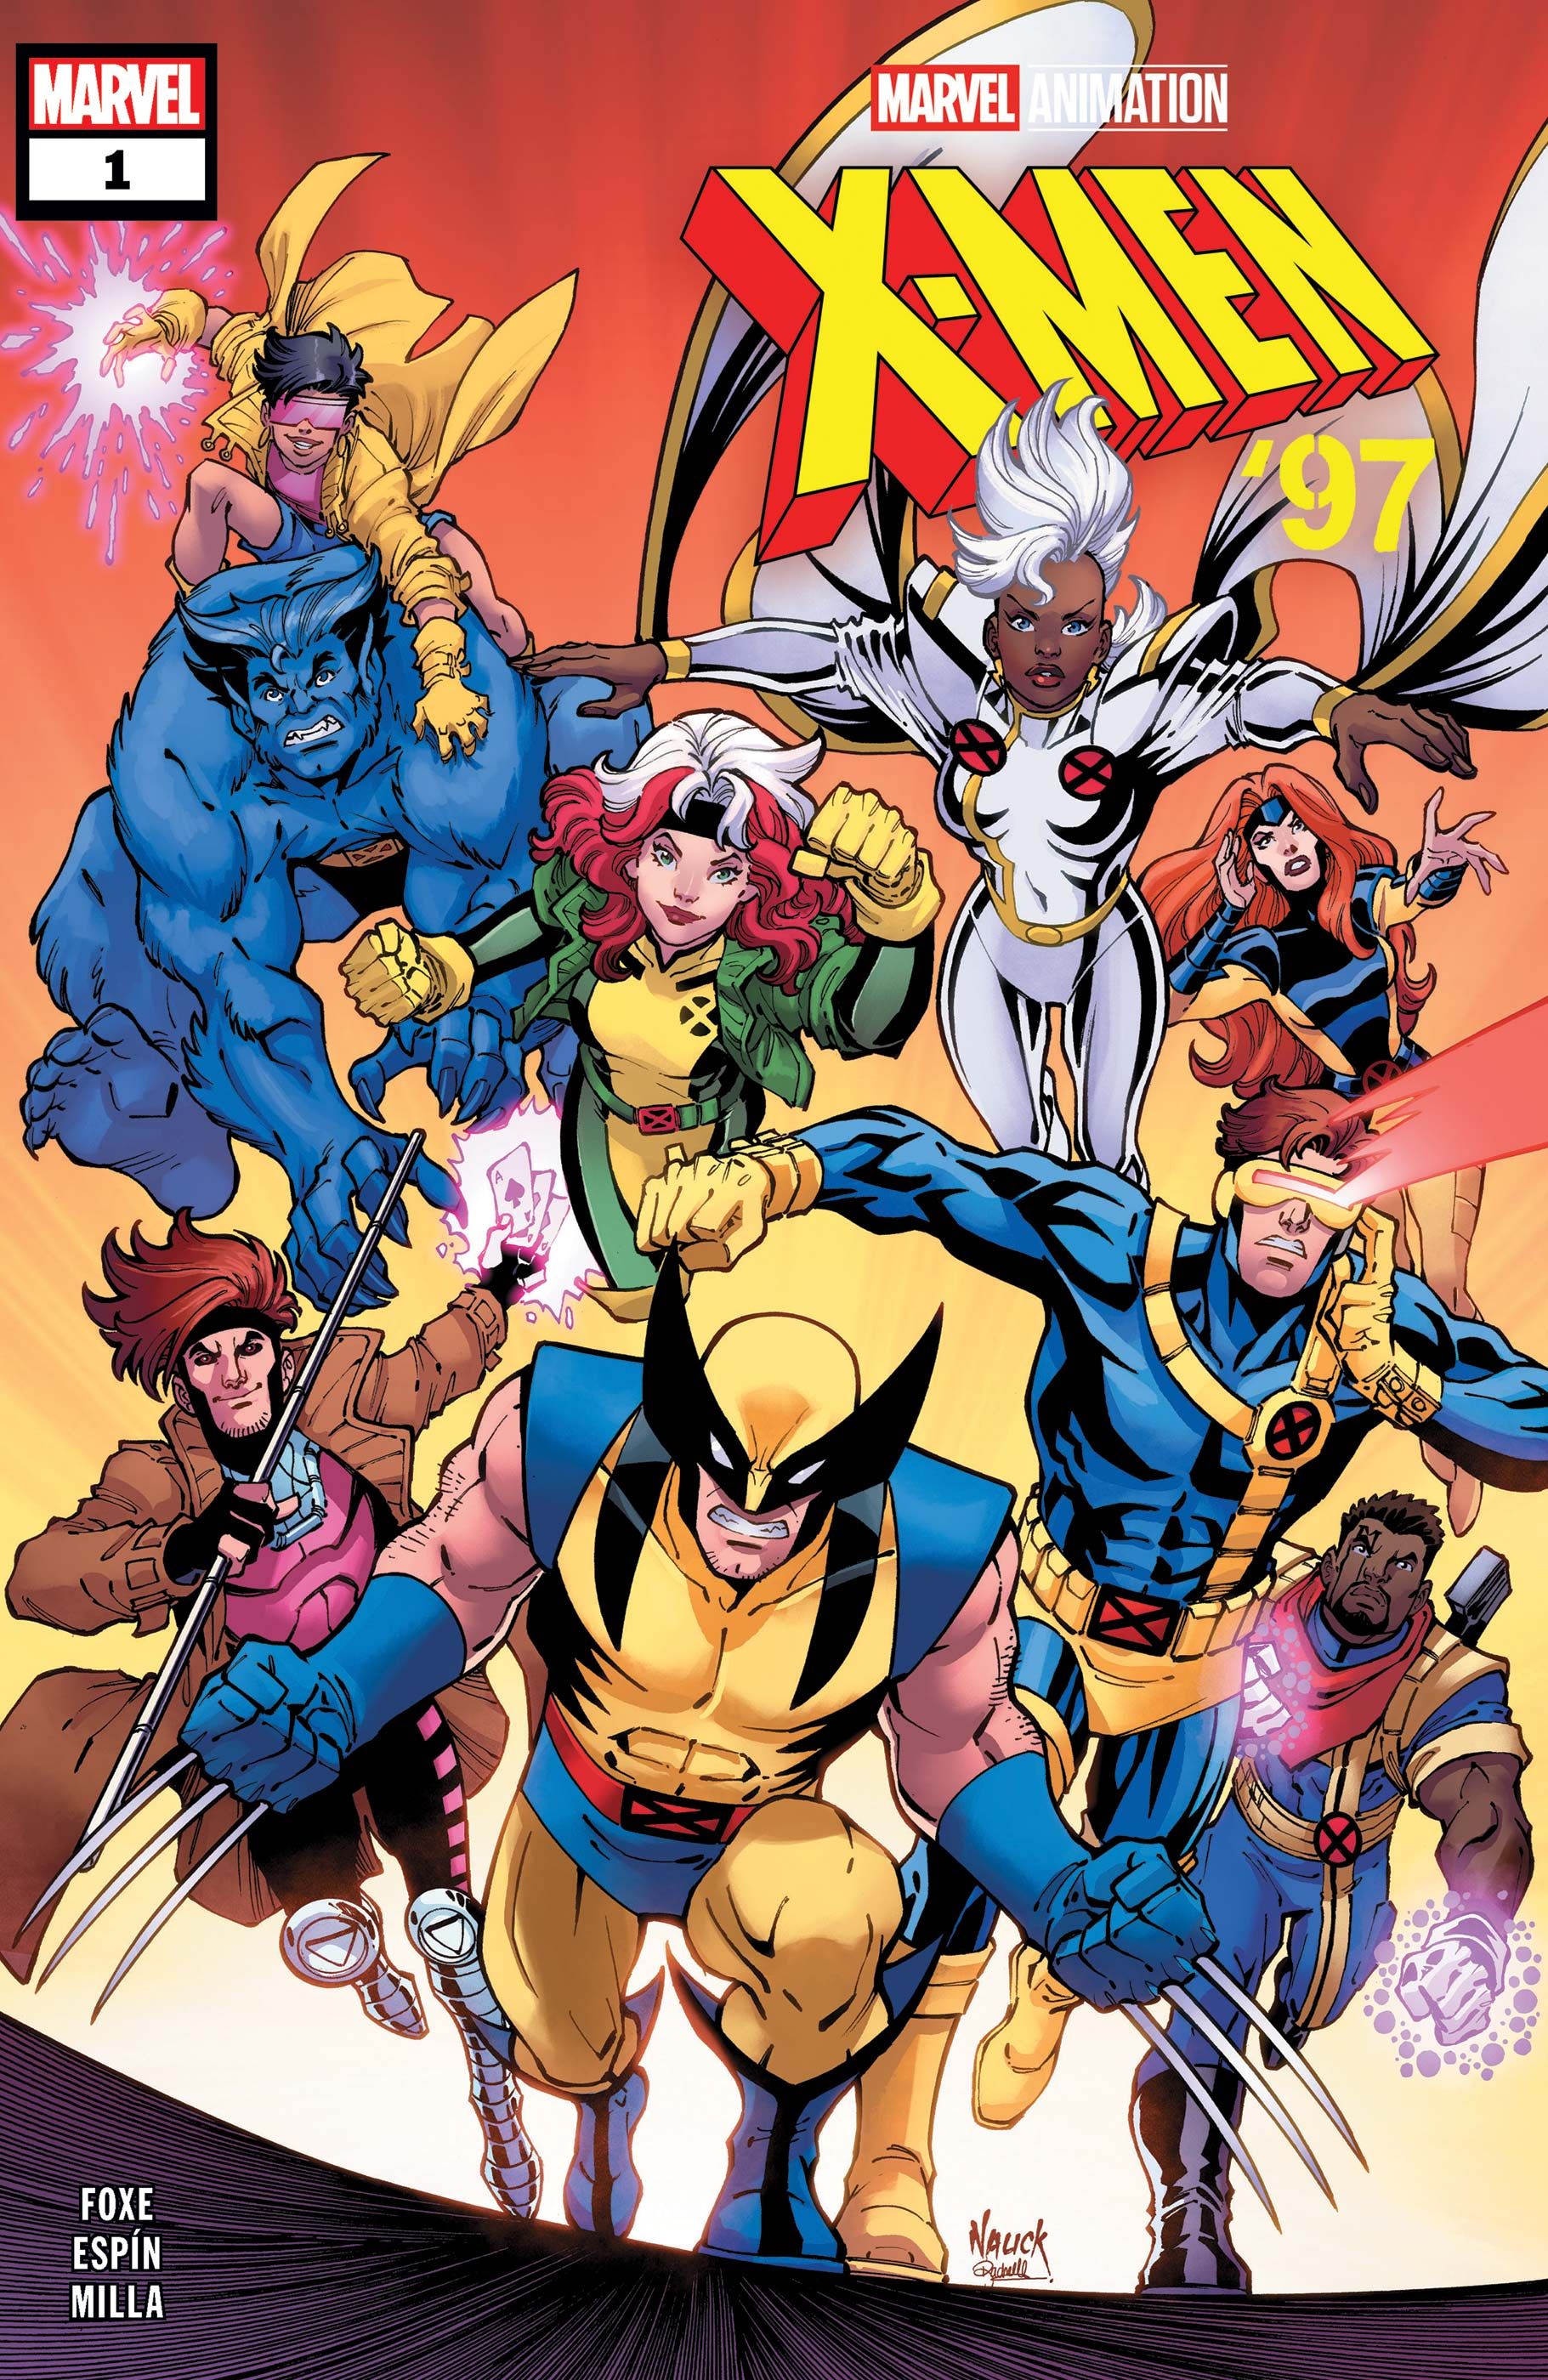 The animated X-Men jump forward into battle